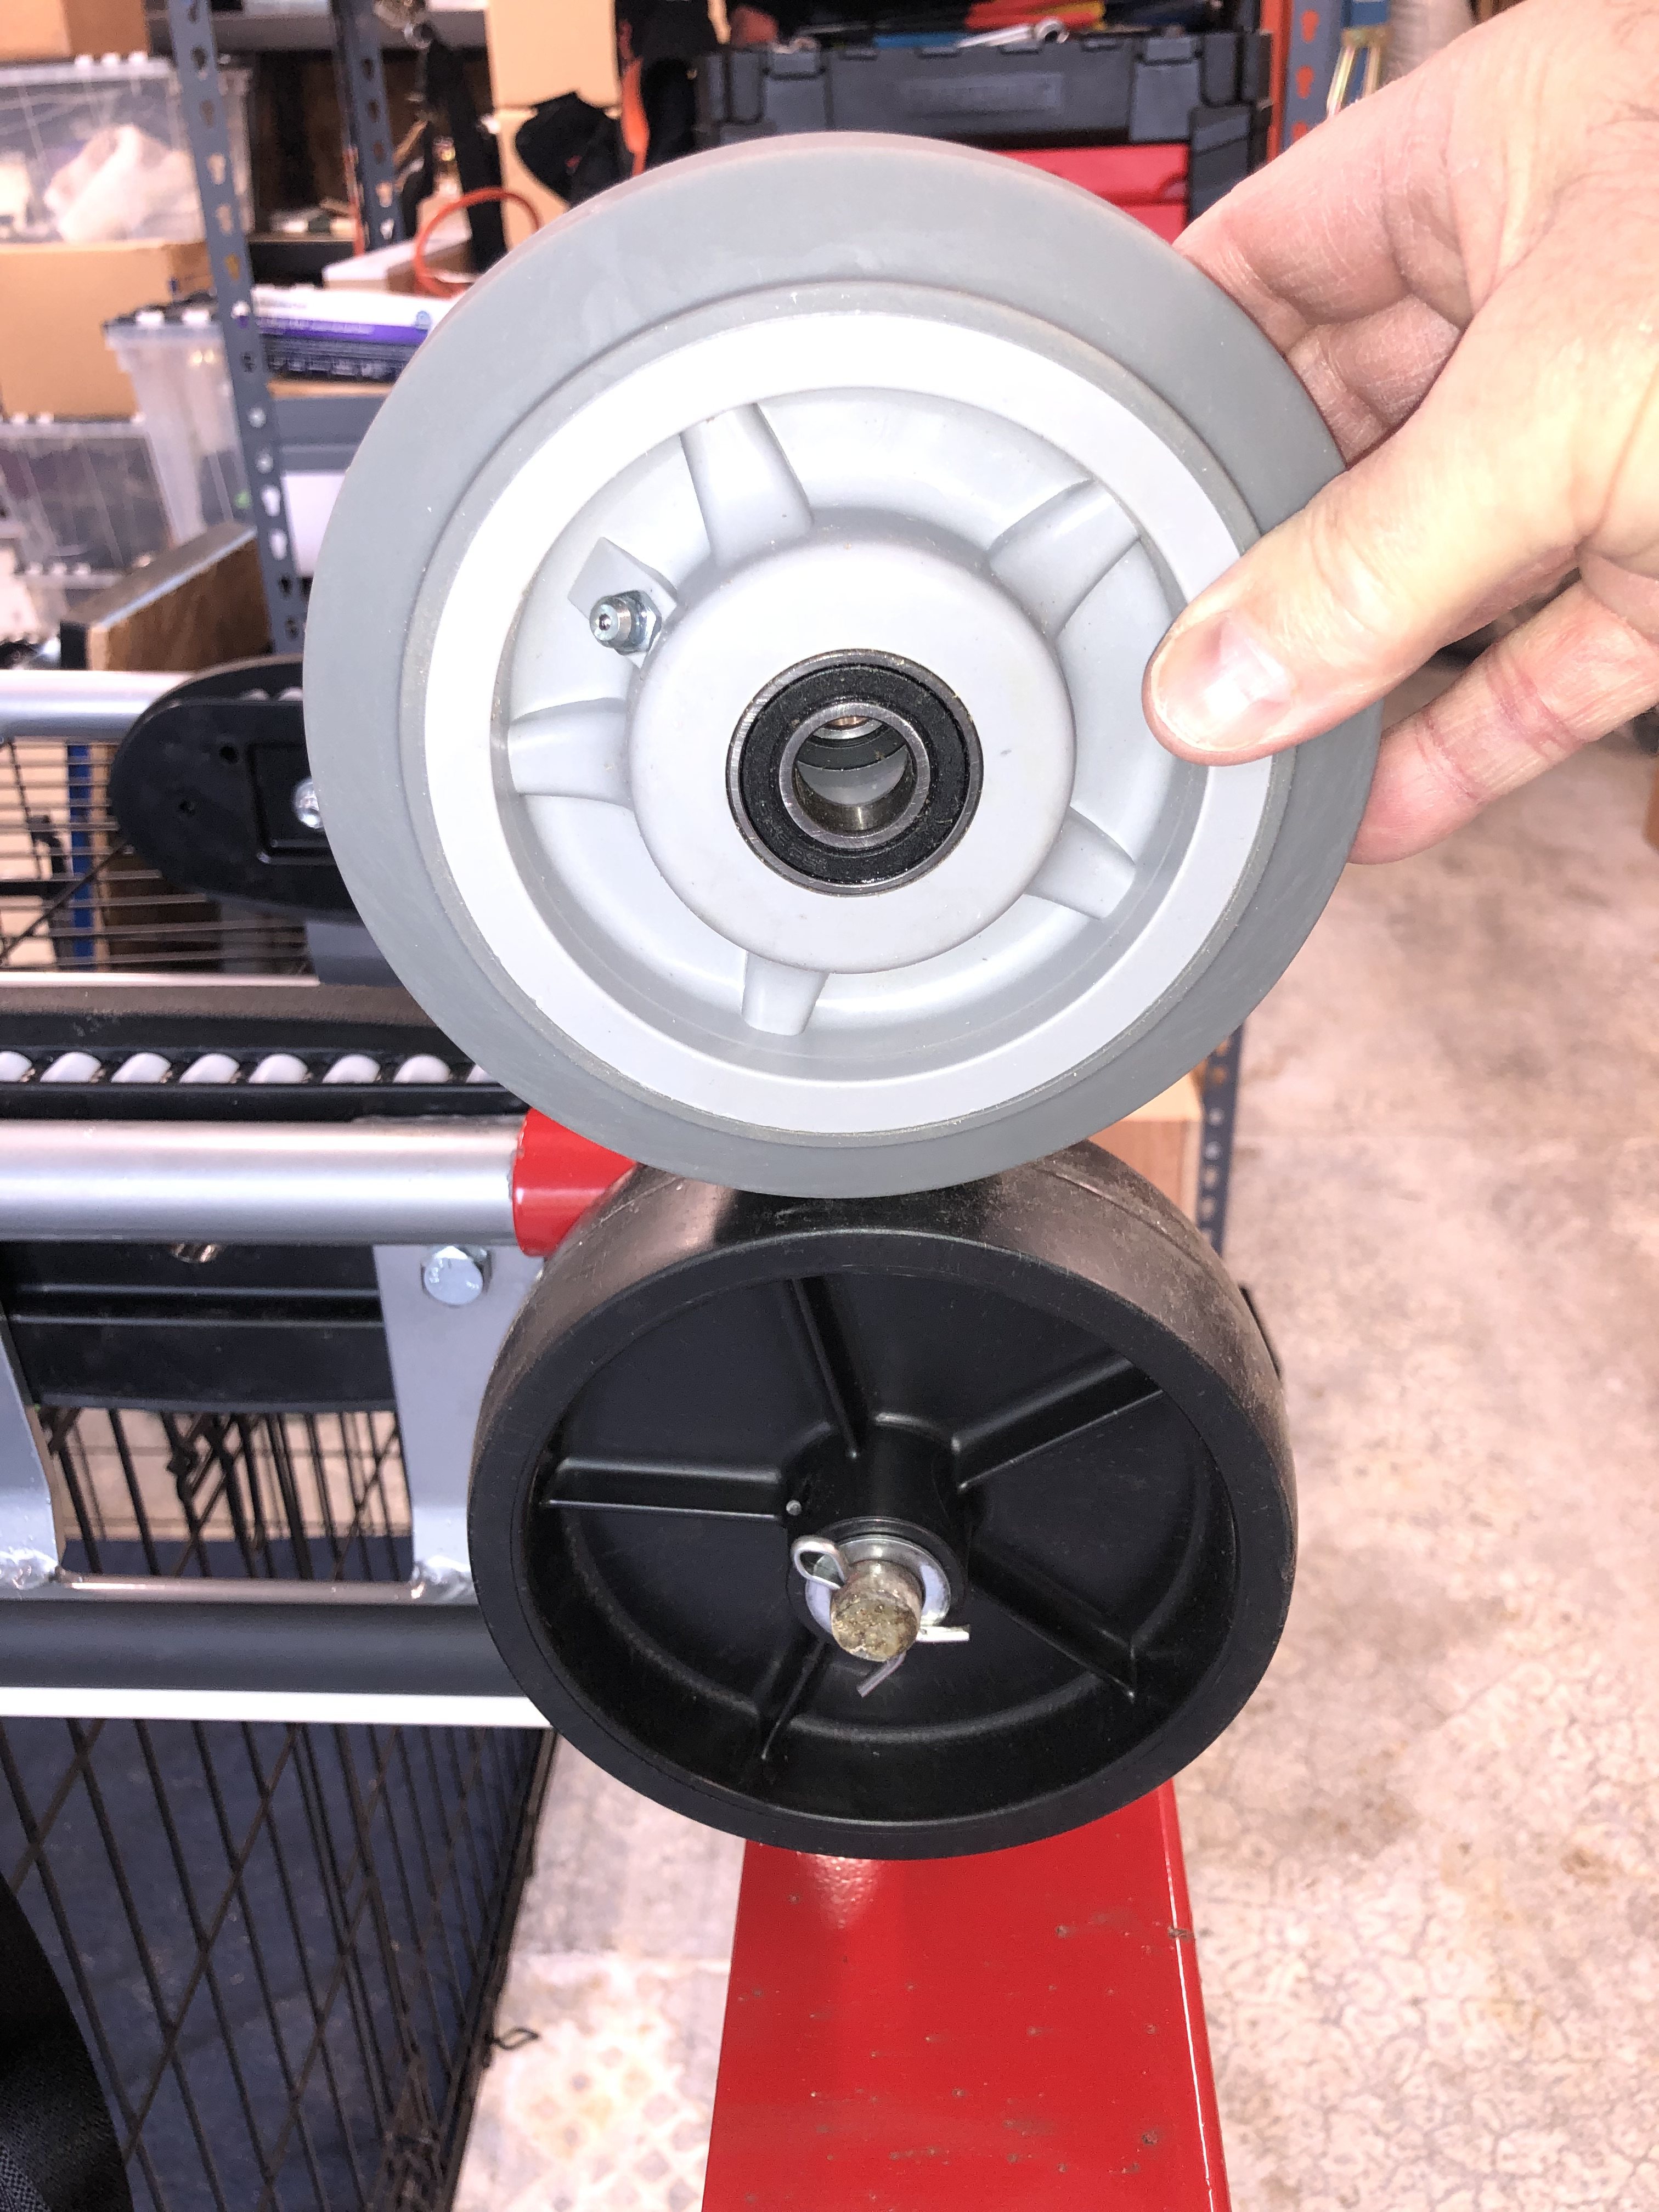 OEM Milwaukee wheel, and replacement ball-bearing wheel.